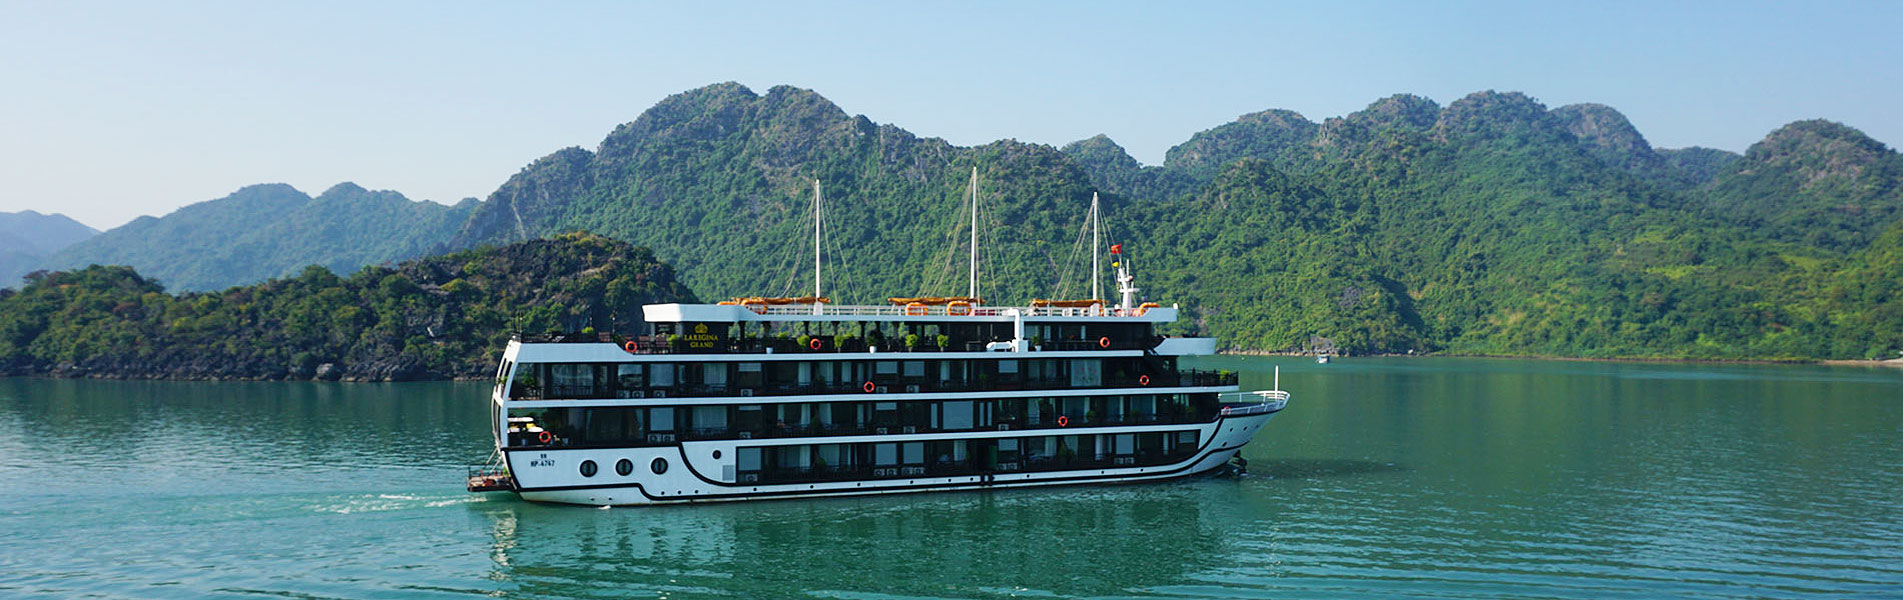 Vietnam Halong Bay Cruise